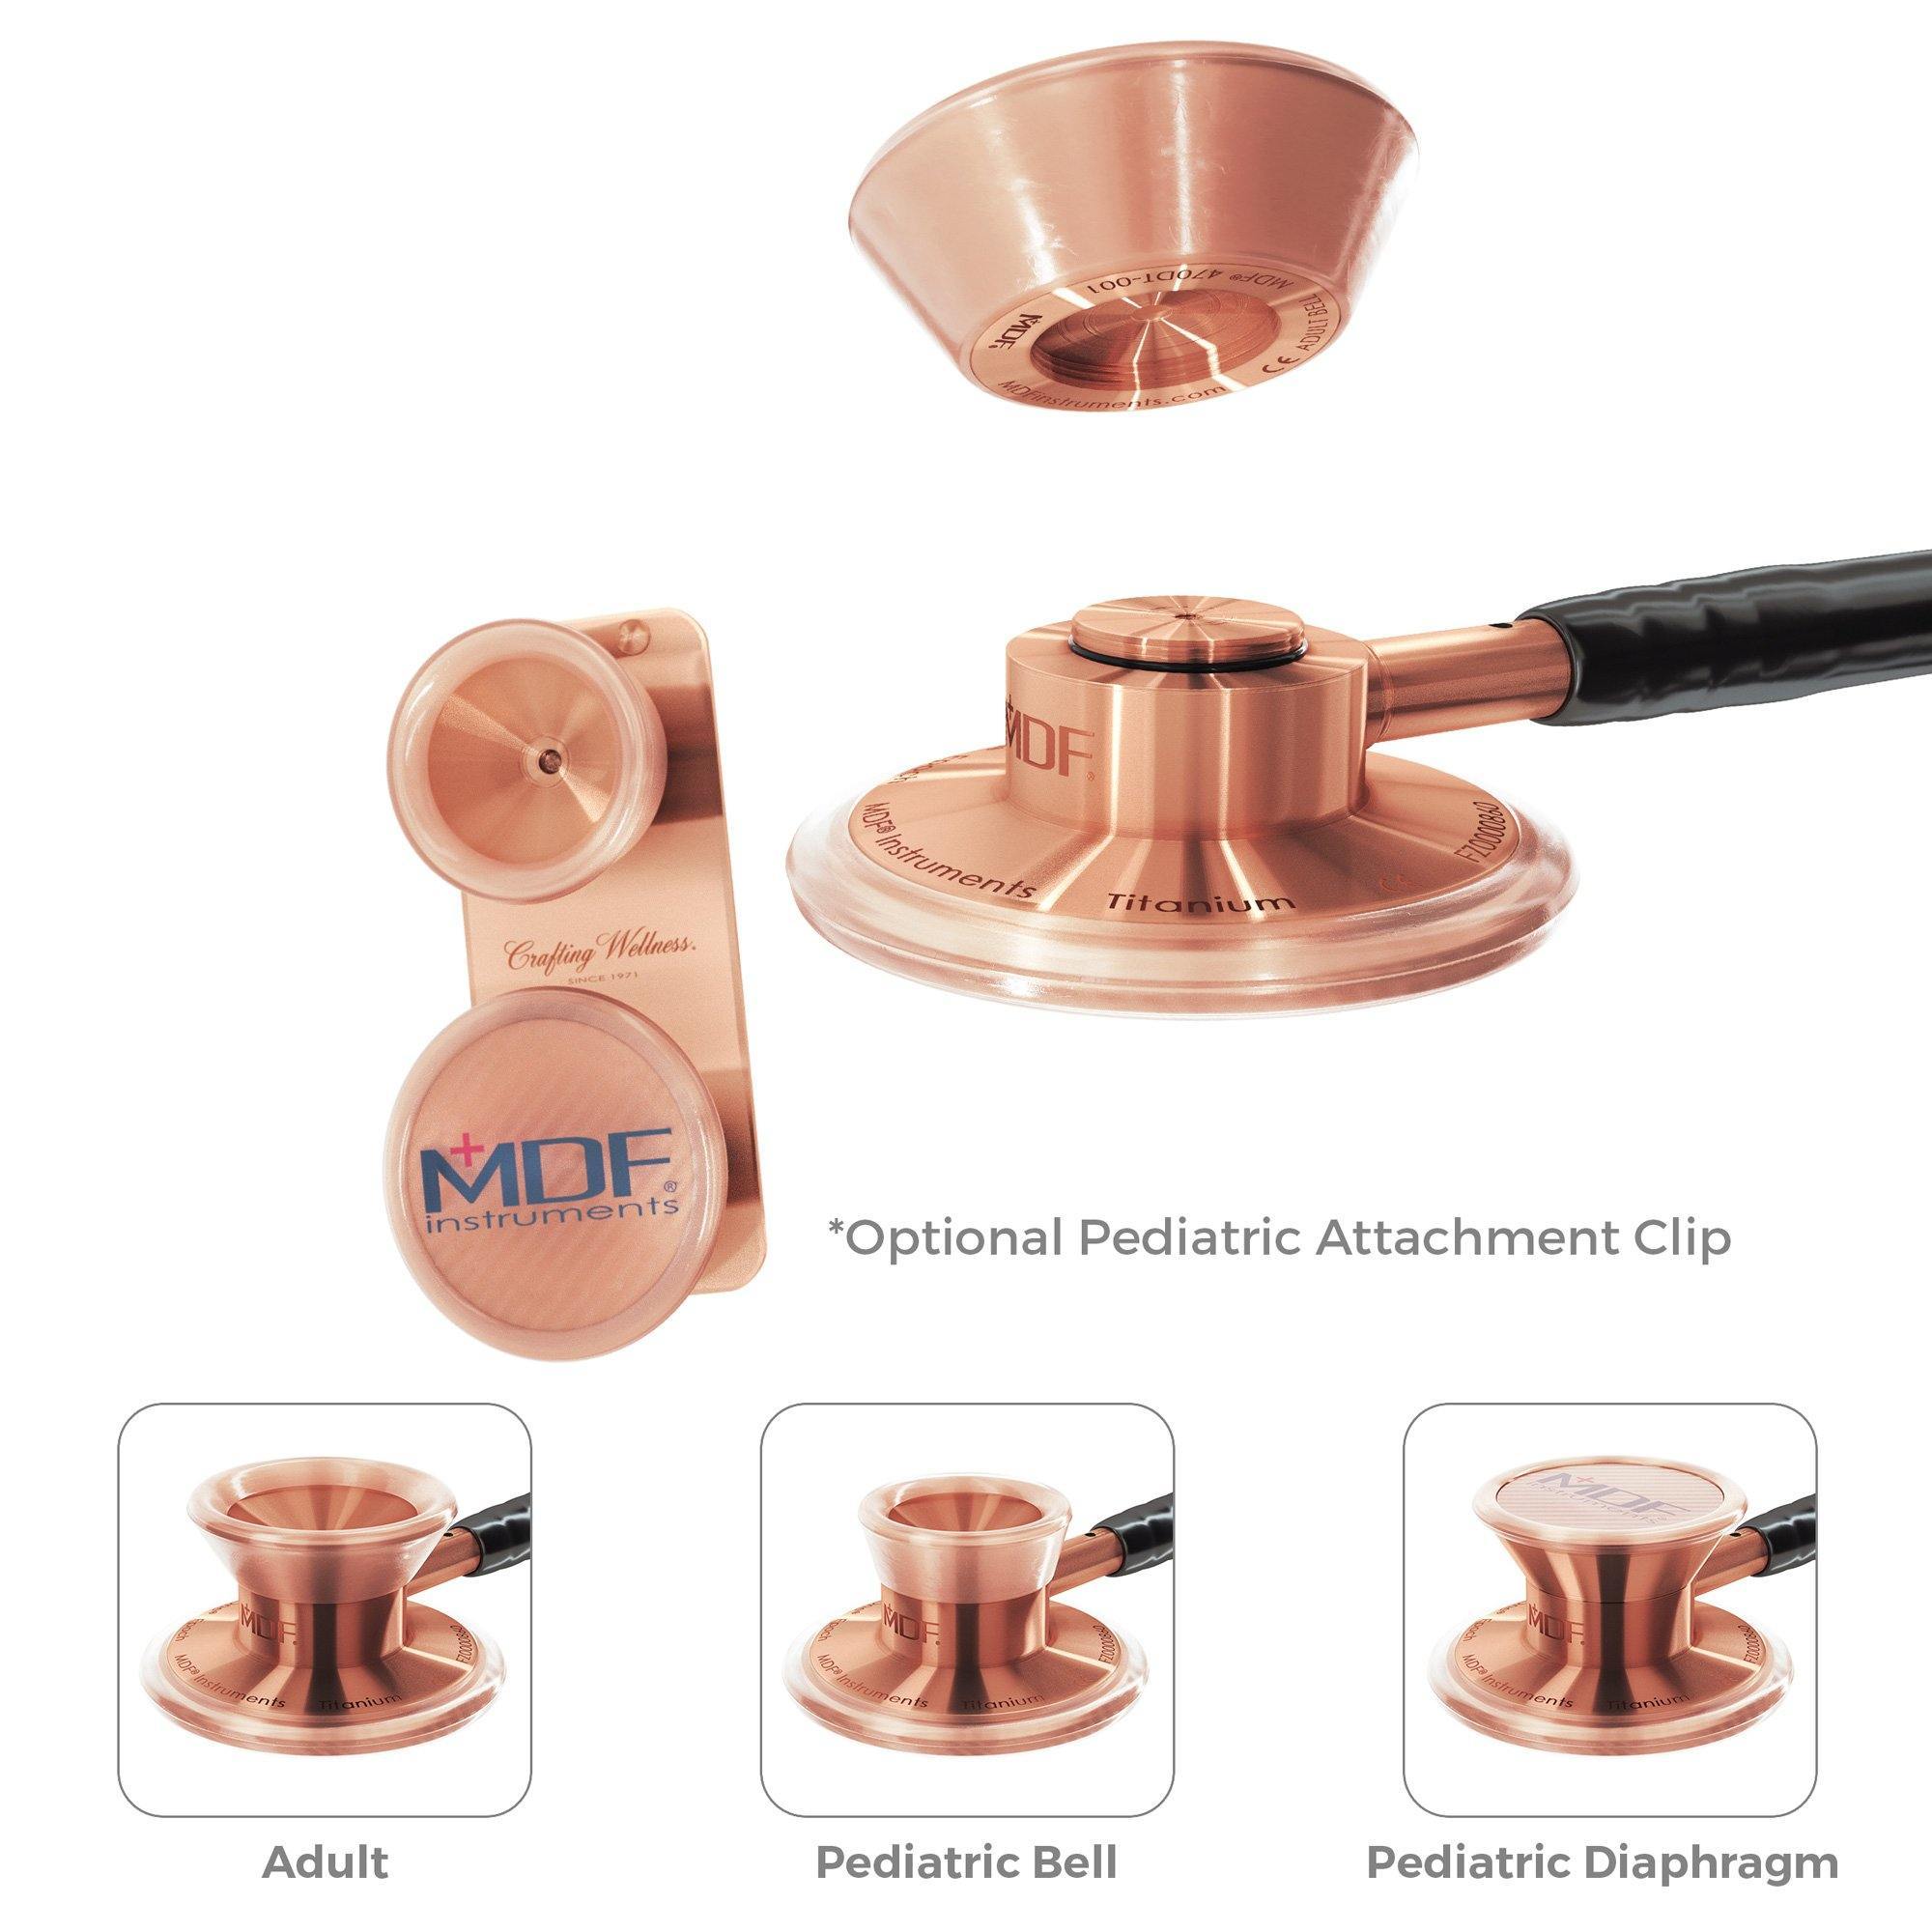 Stethoscope MDF Instruments MD One Epoch Titanium NoirNoir Black and Rose Gold Attachment Clip for Pediatric Patients